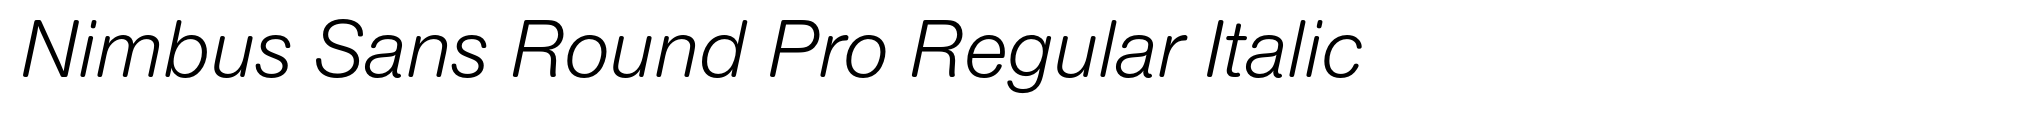 Nimbus Sans Round Pro Regular Italic image